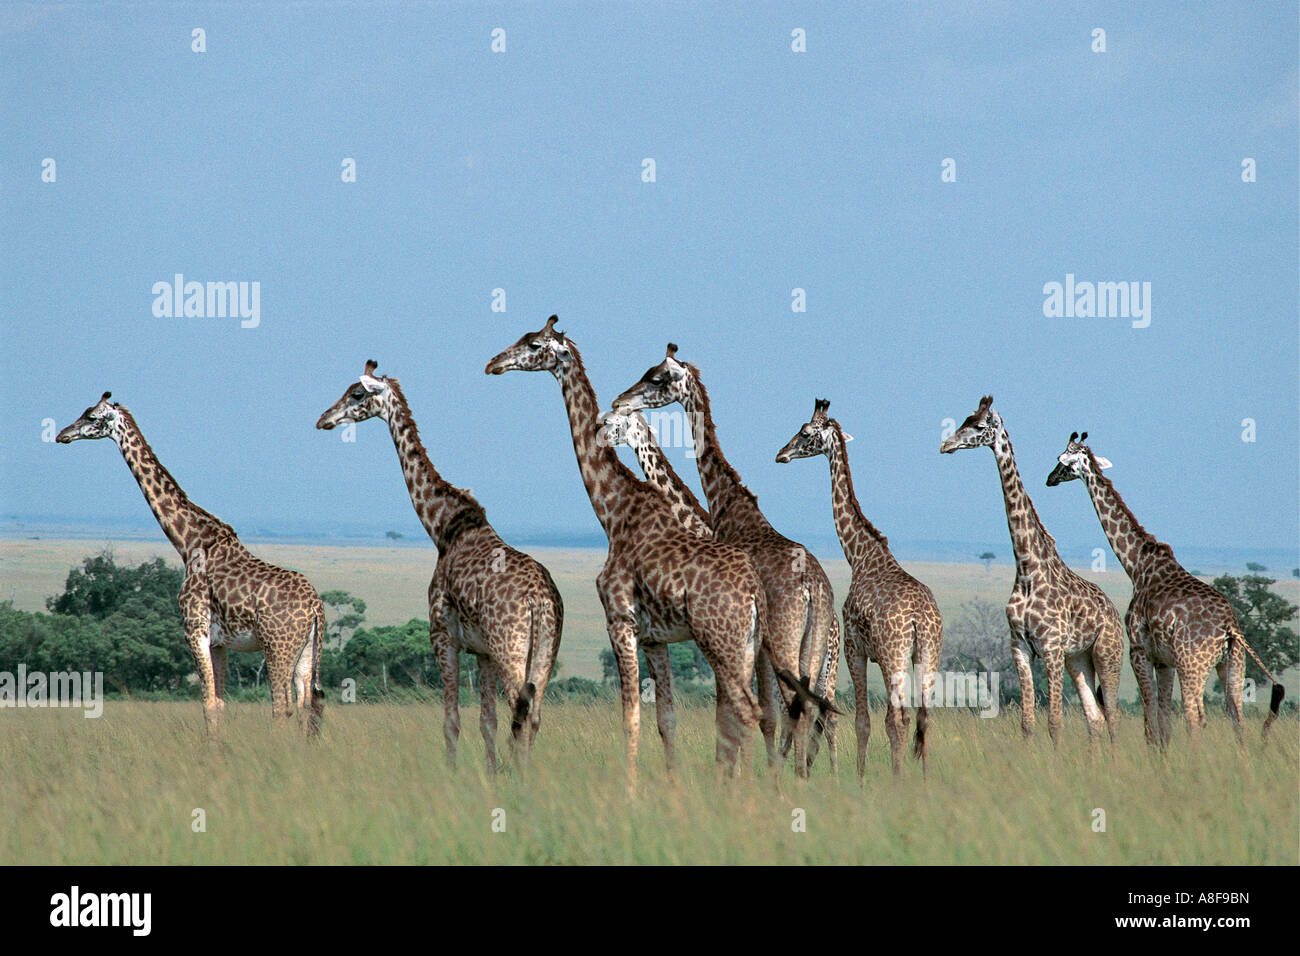 Herd of Masai or Common Giraffe Masai Mara National Reserve Kenya They are all facing the same way as though watching a predator Stock Photo